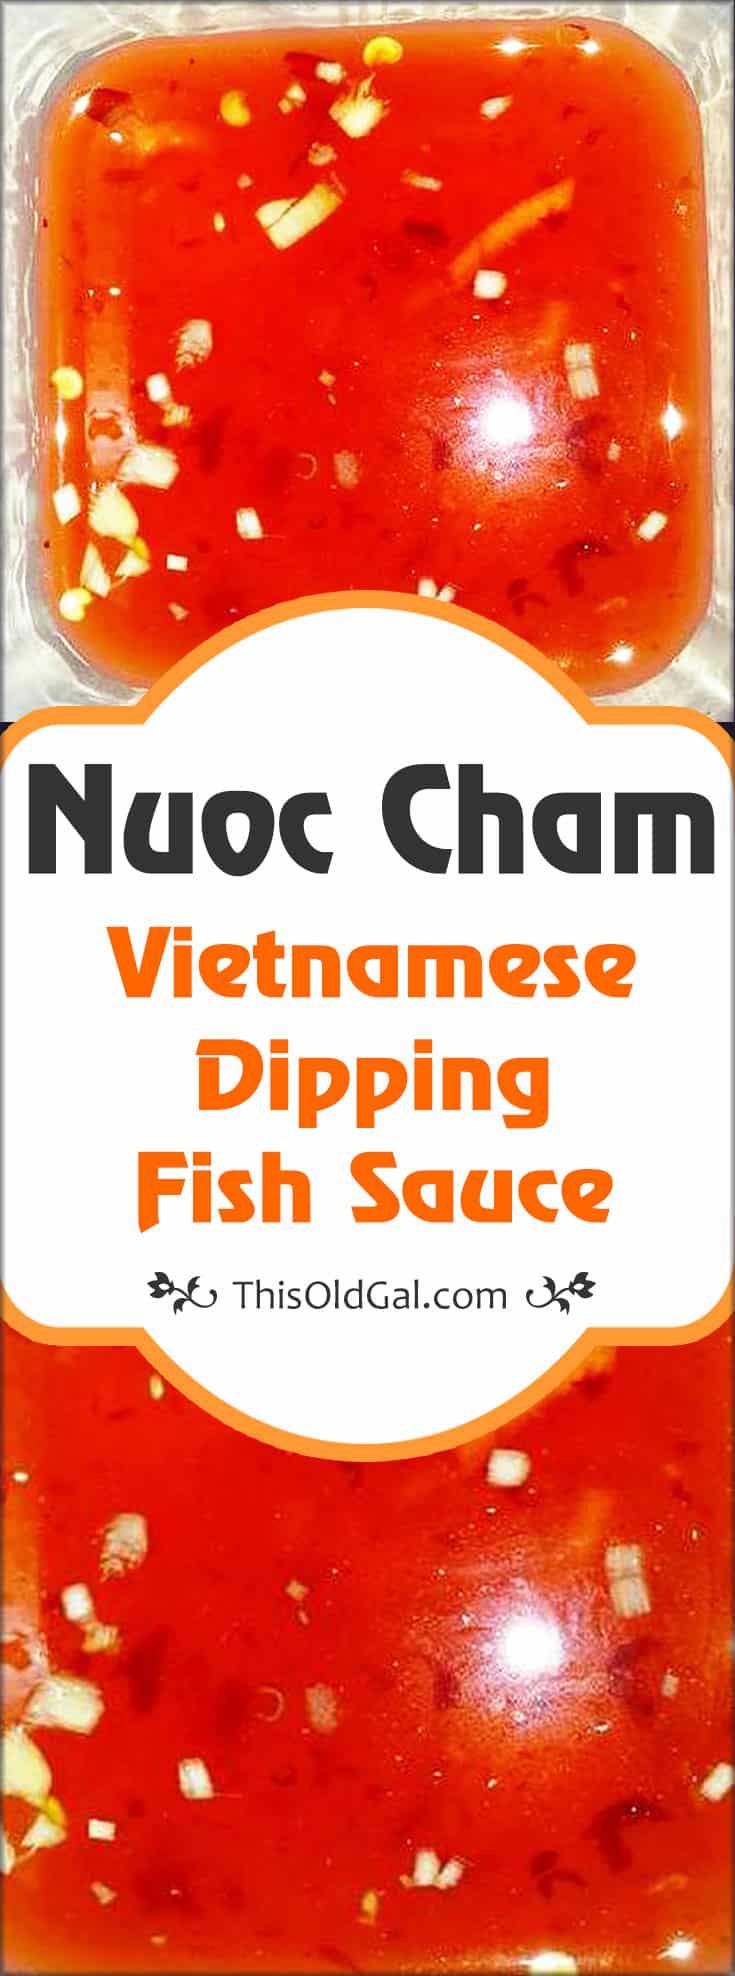 Nuoc Cham (Vietnamese Dipping Fish Sauce)